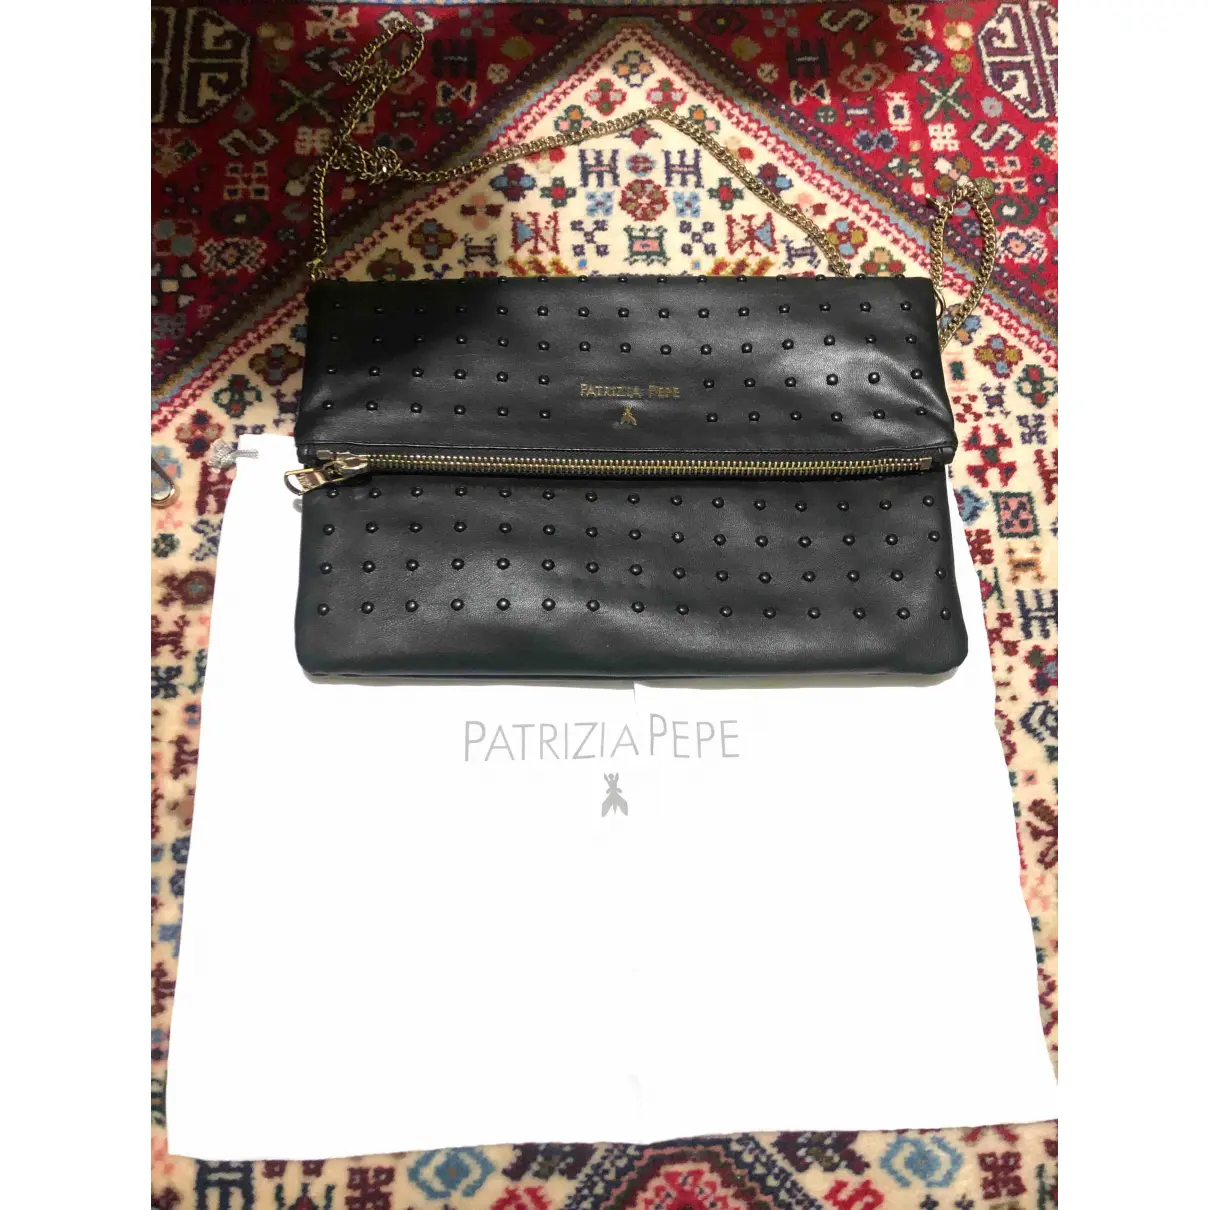 Clutch bag Patrizia Pepe